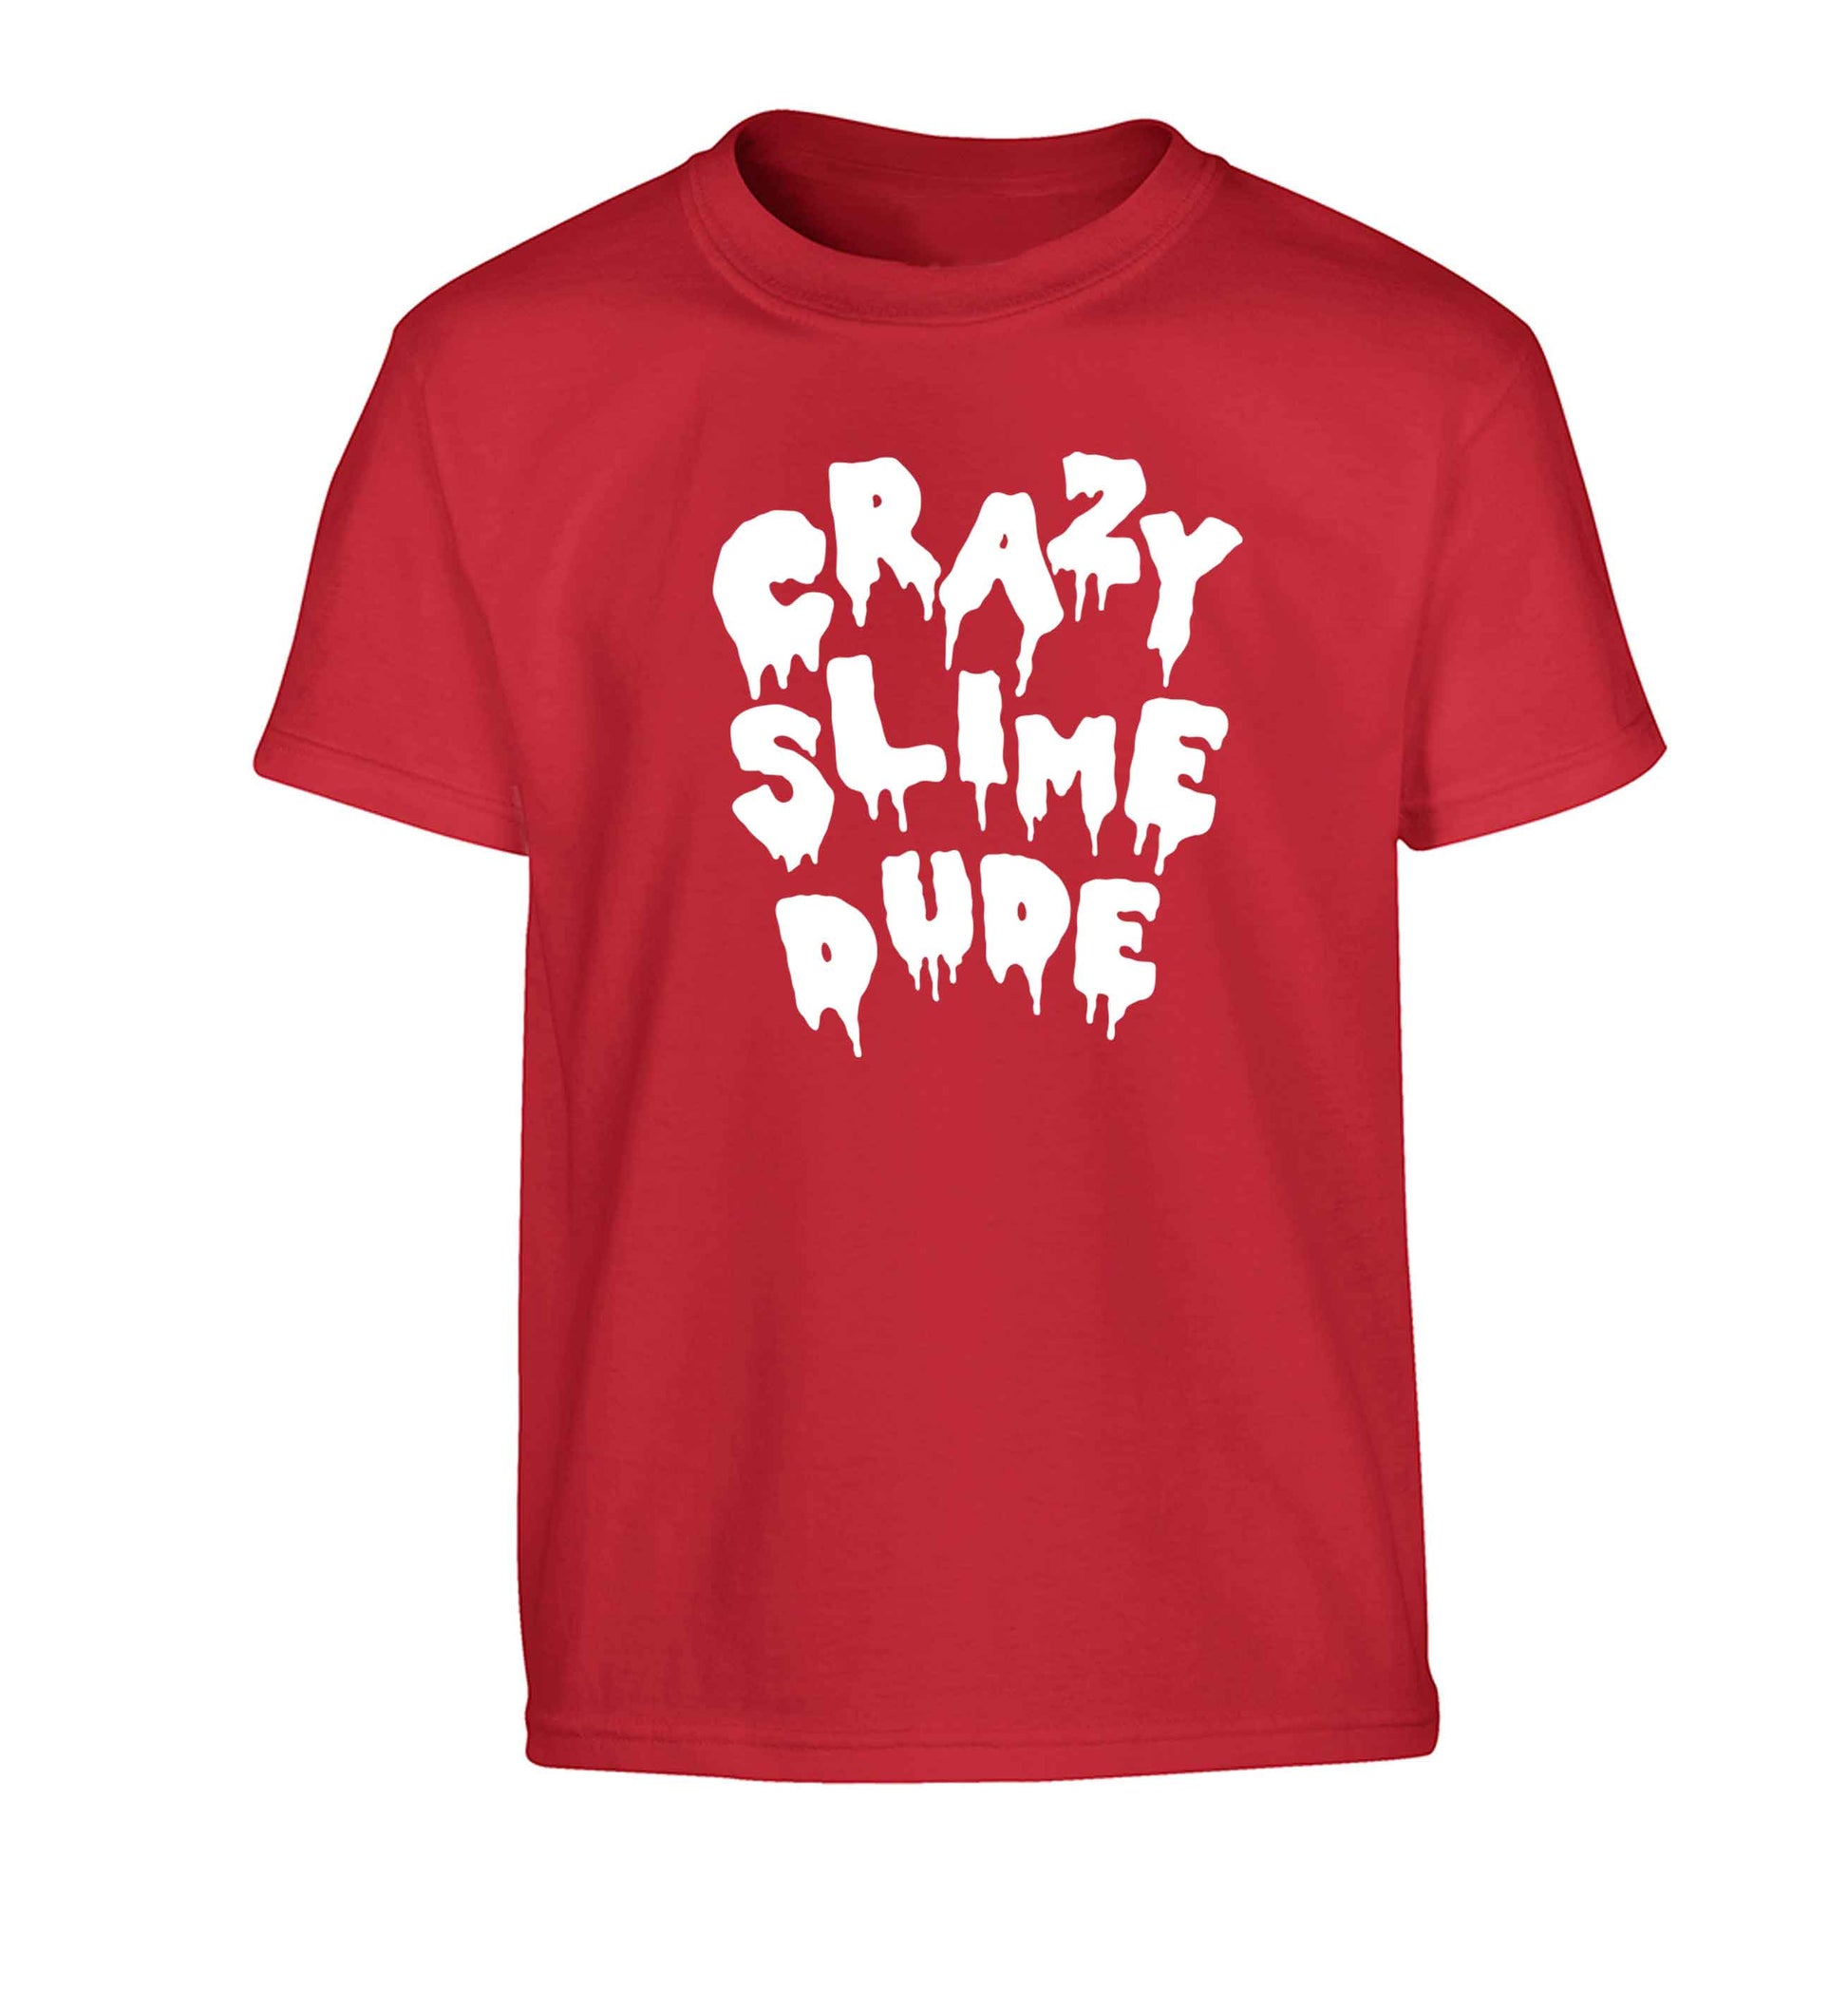 Crazy slime dude Children's red Tshirt 12-13 Years